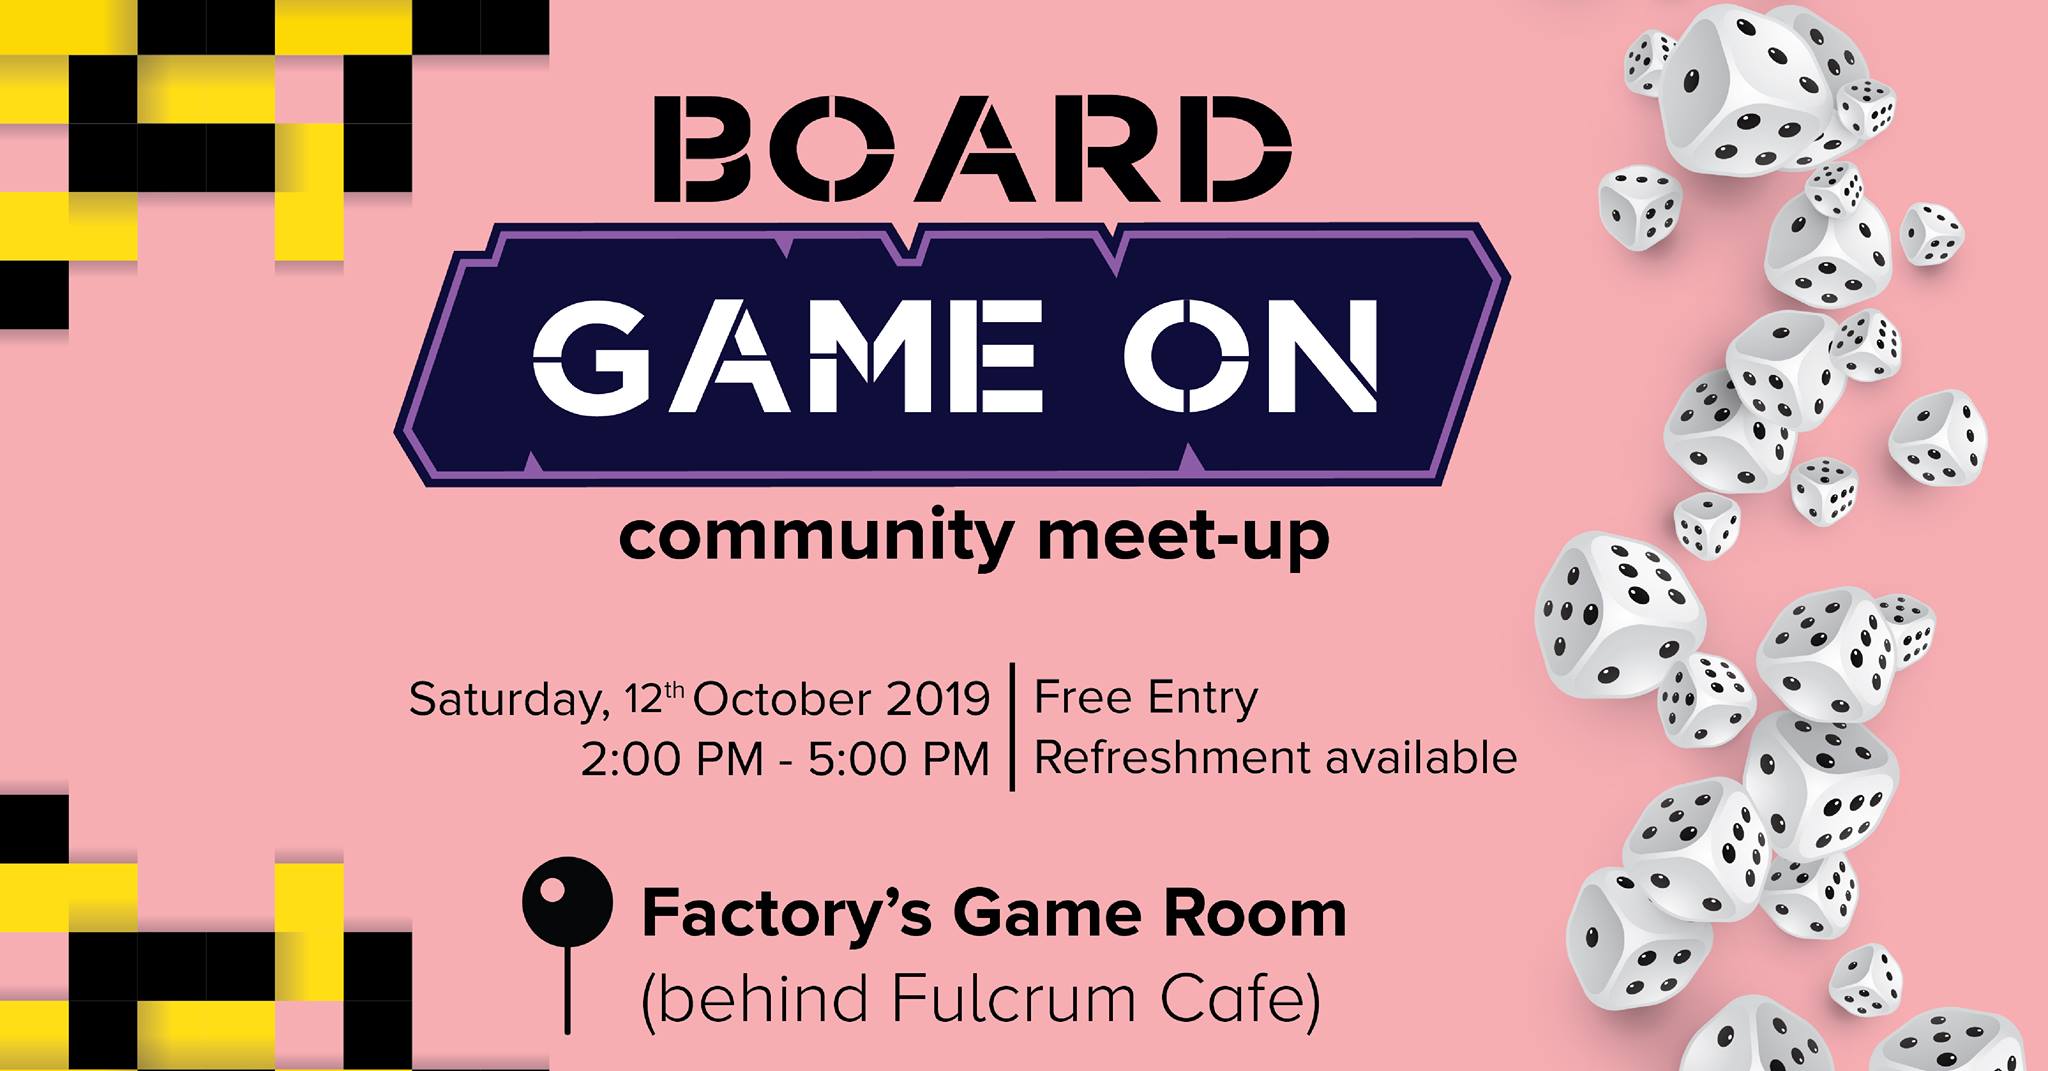 Board Game Meet-Up